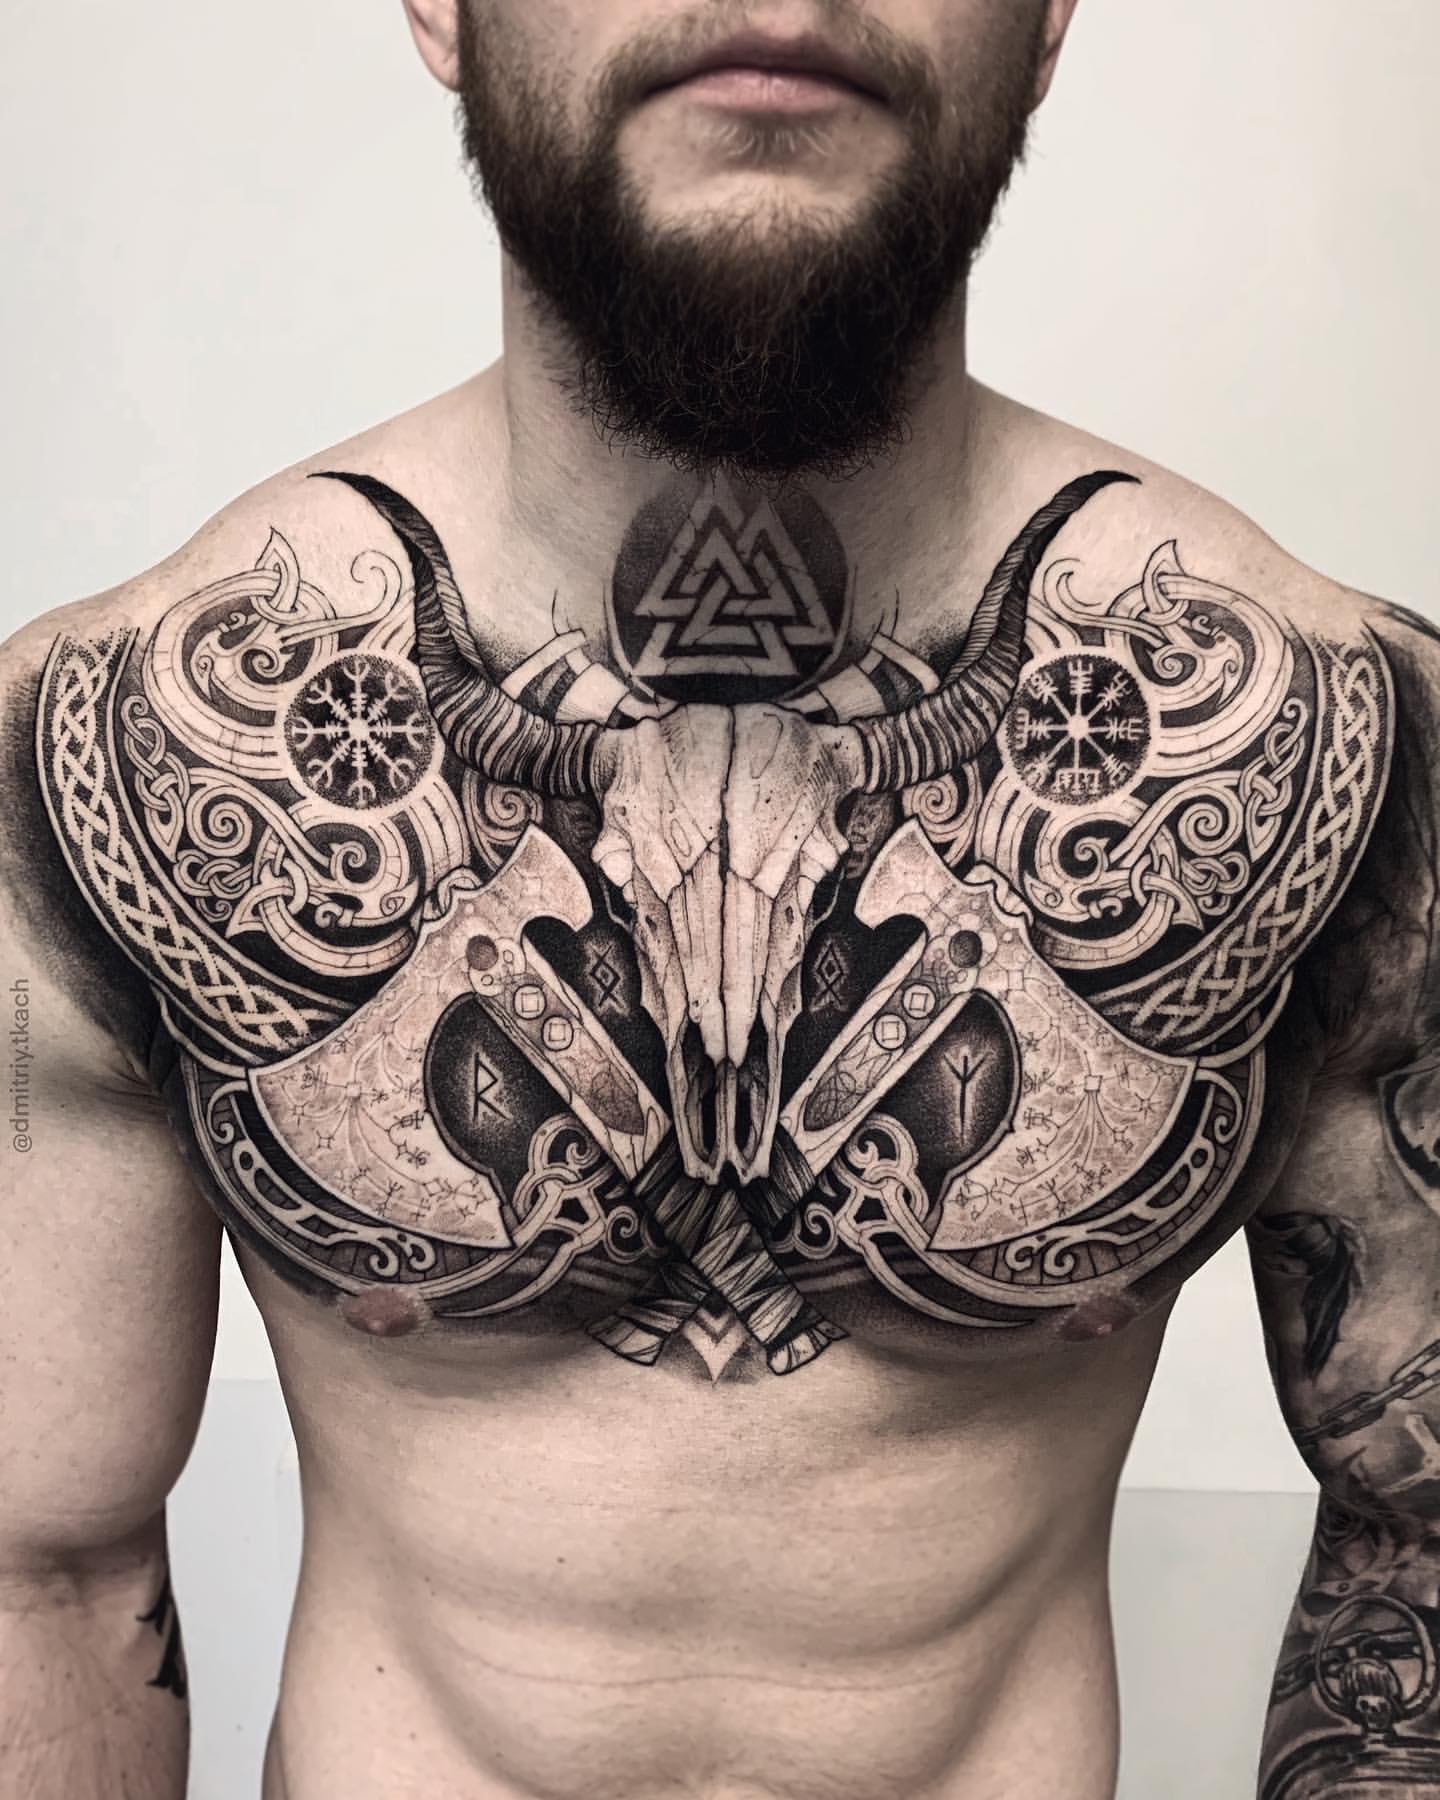 Chest Tattoos Ideas for Men 2